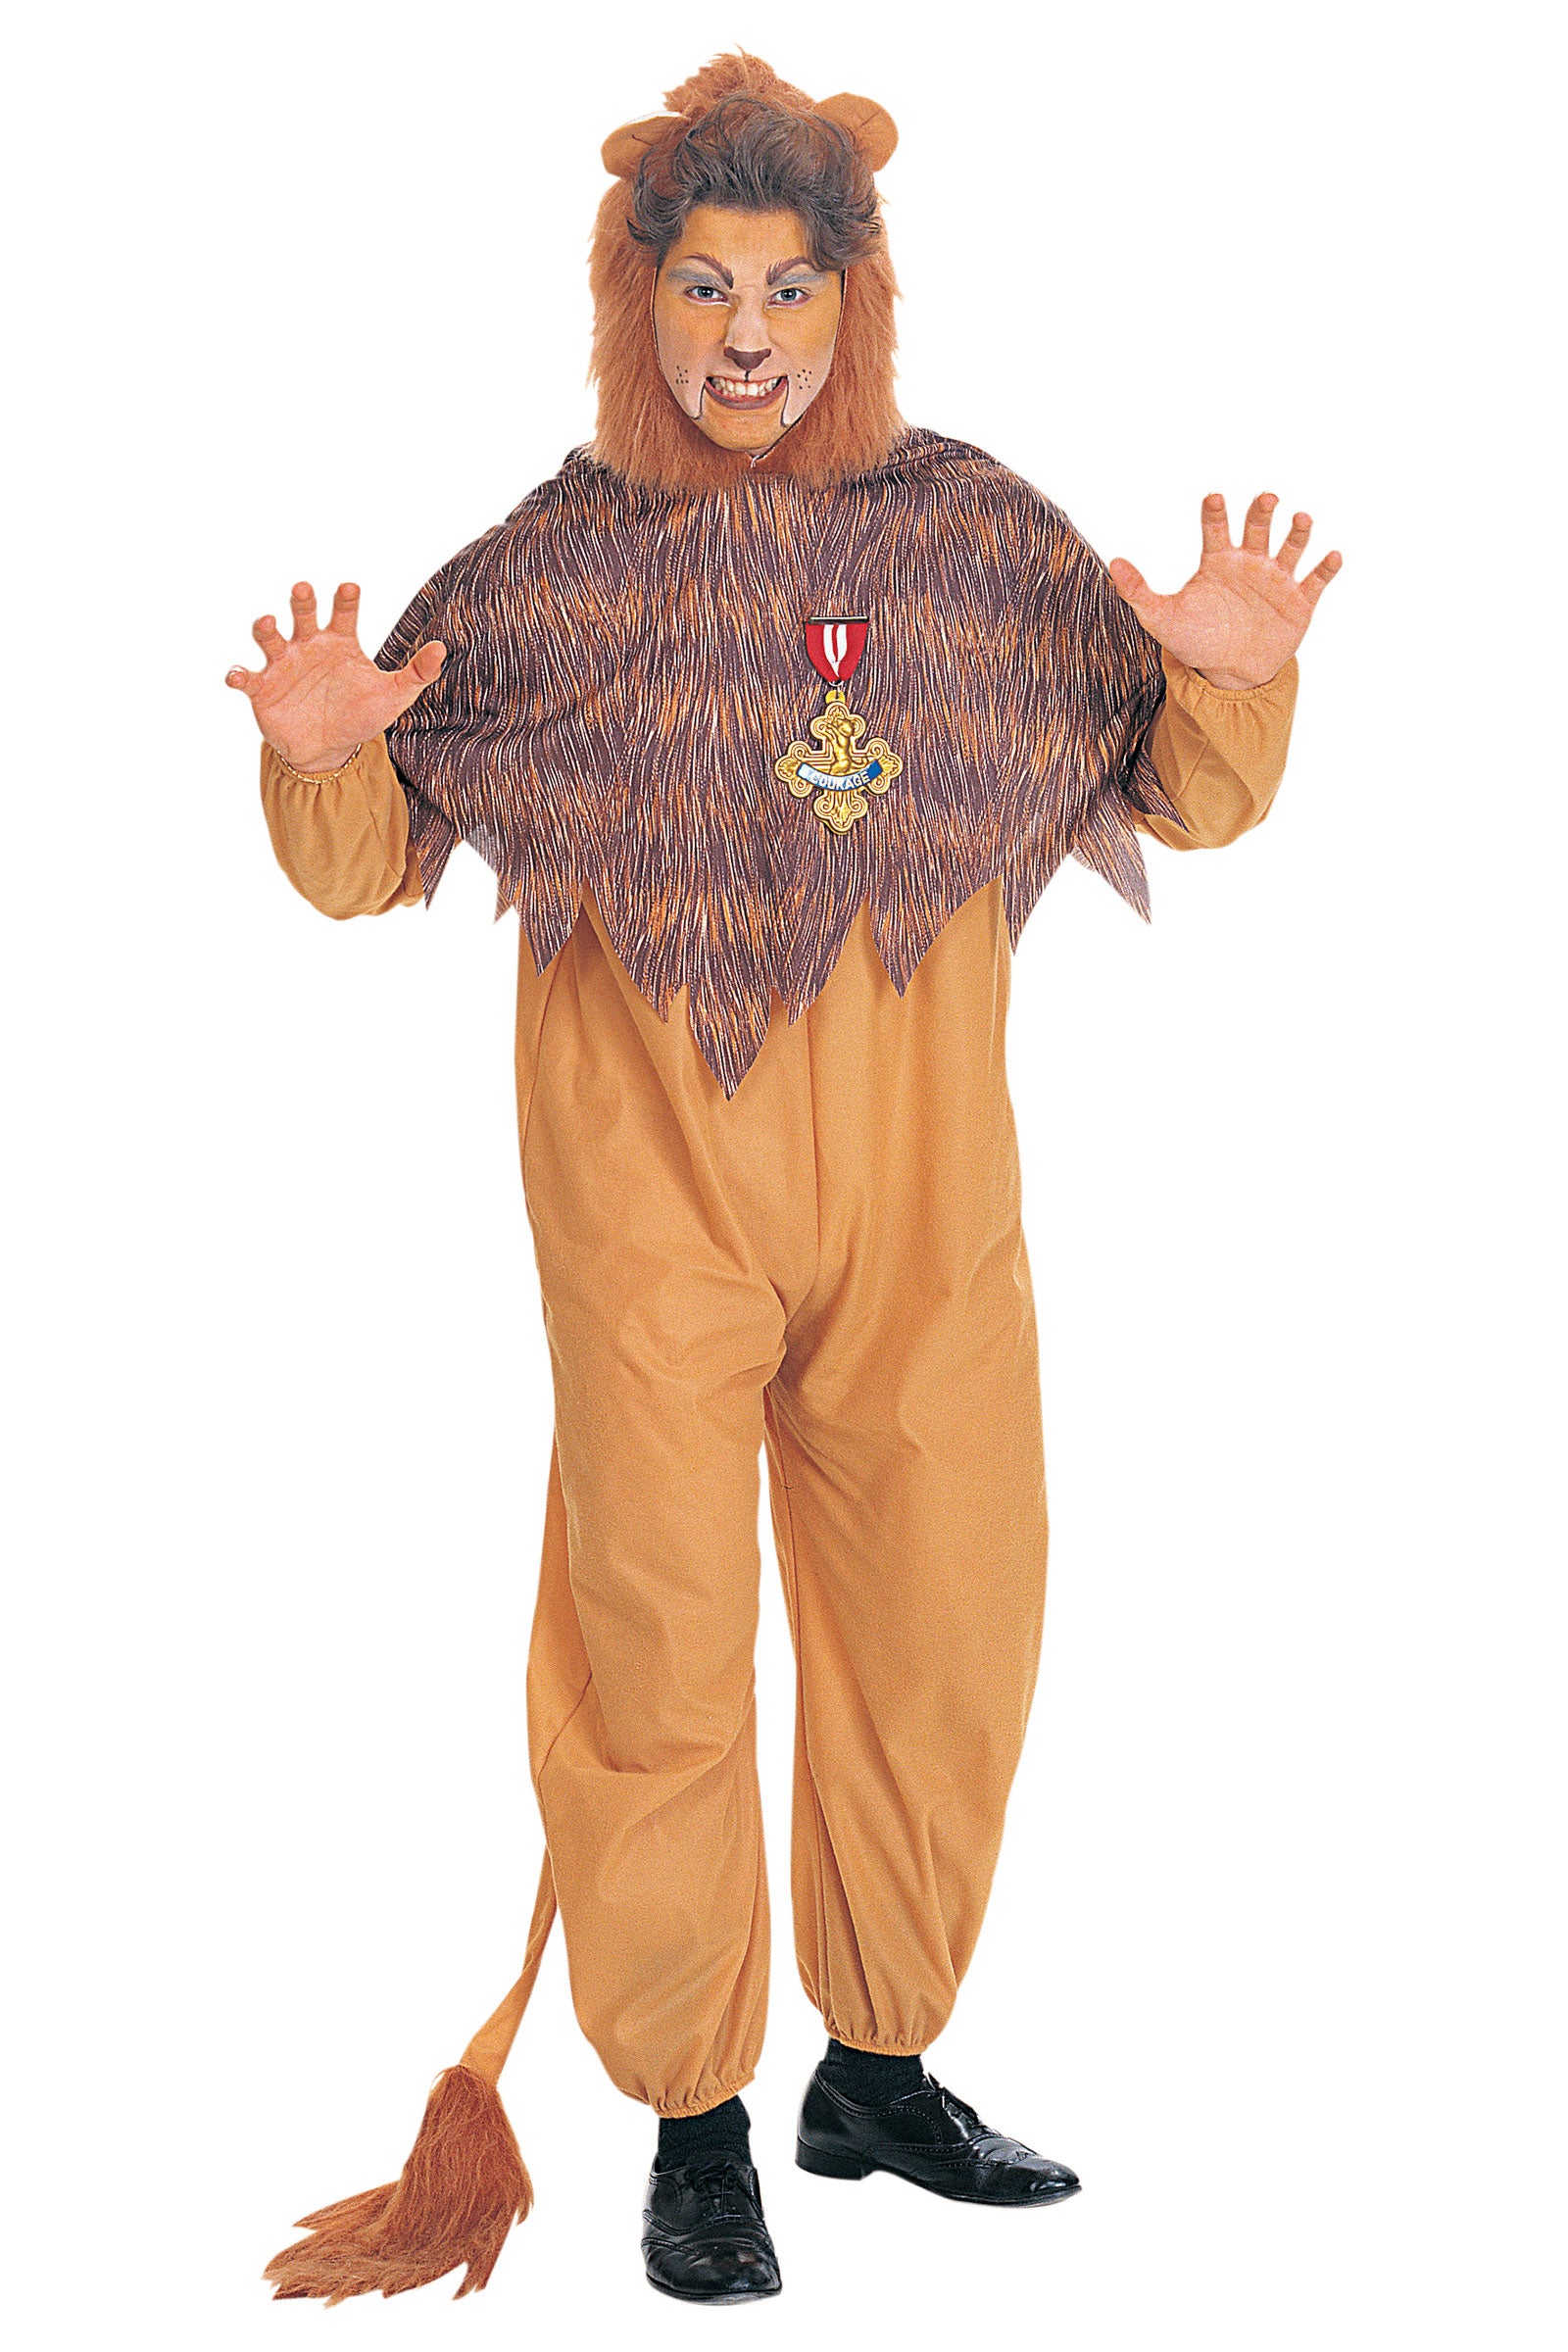 Cowardly Lion Adult Costume